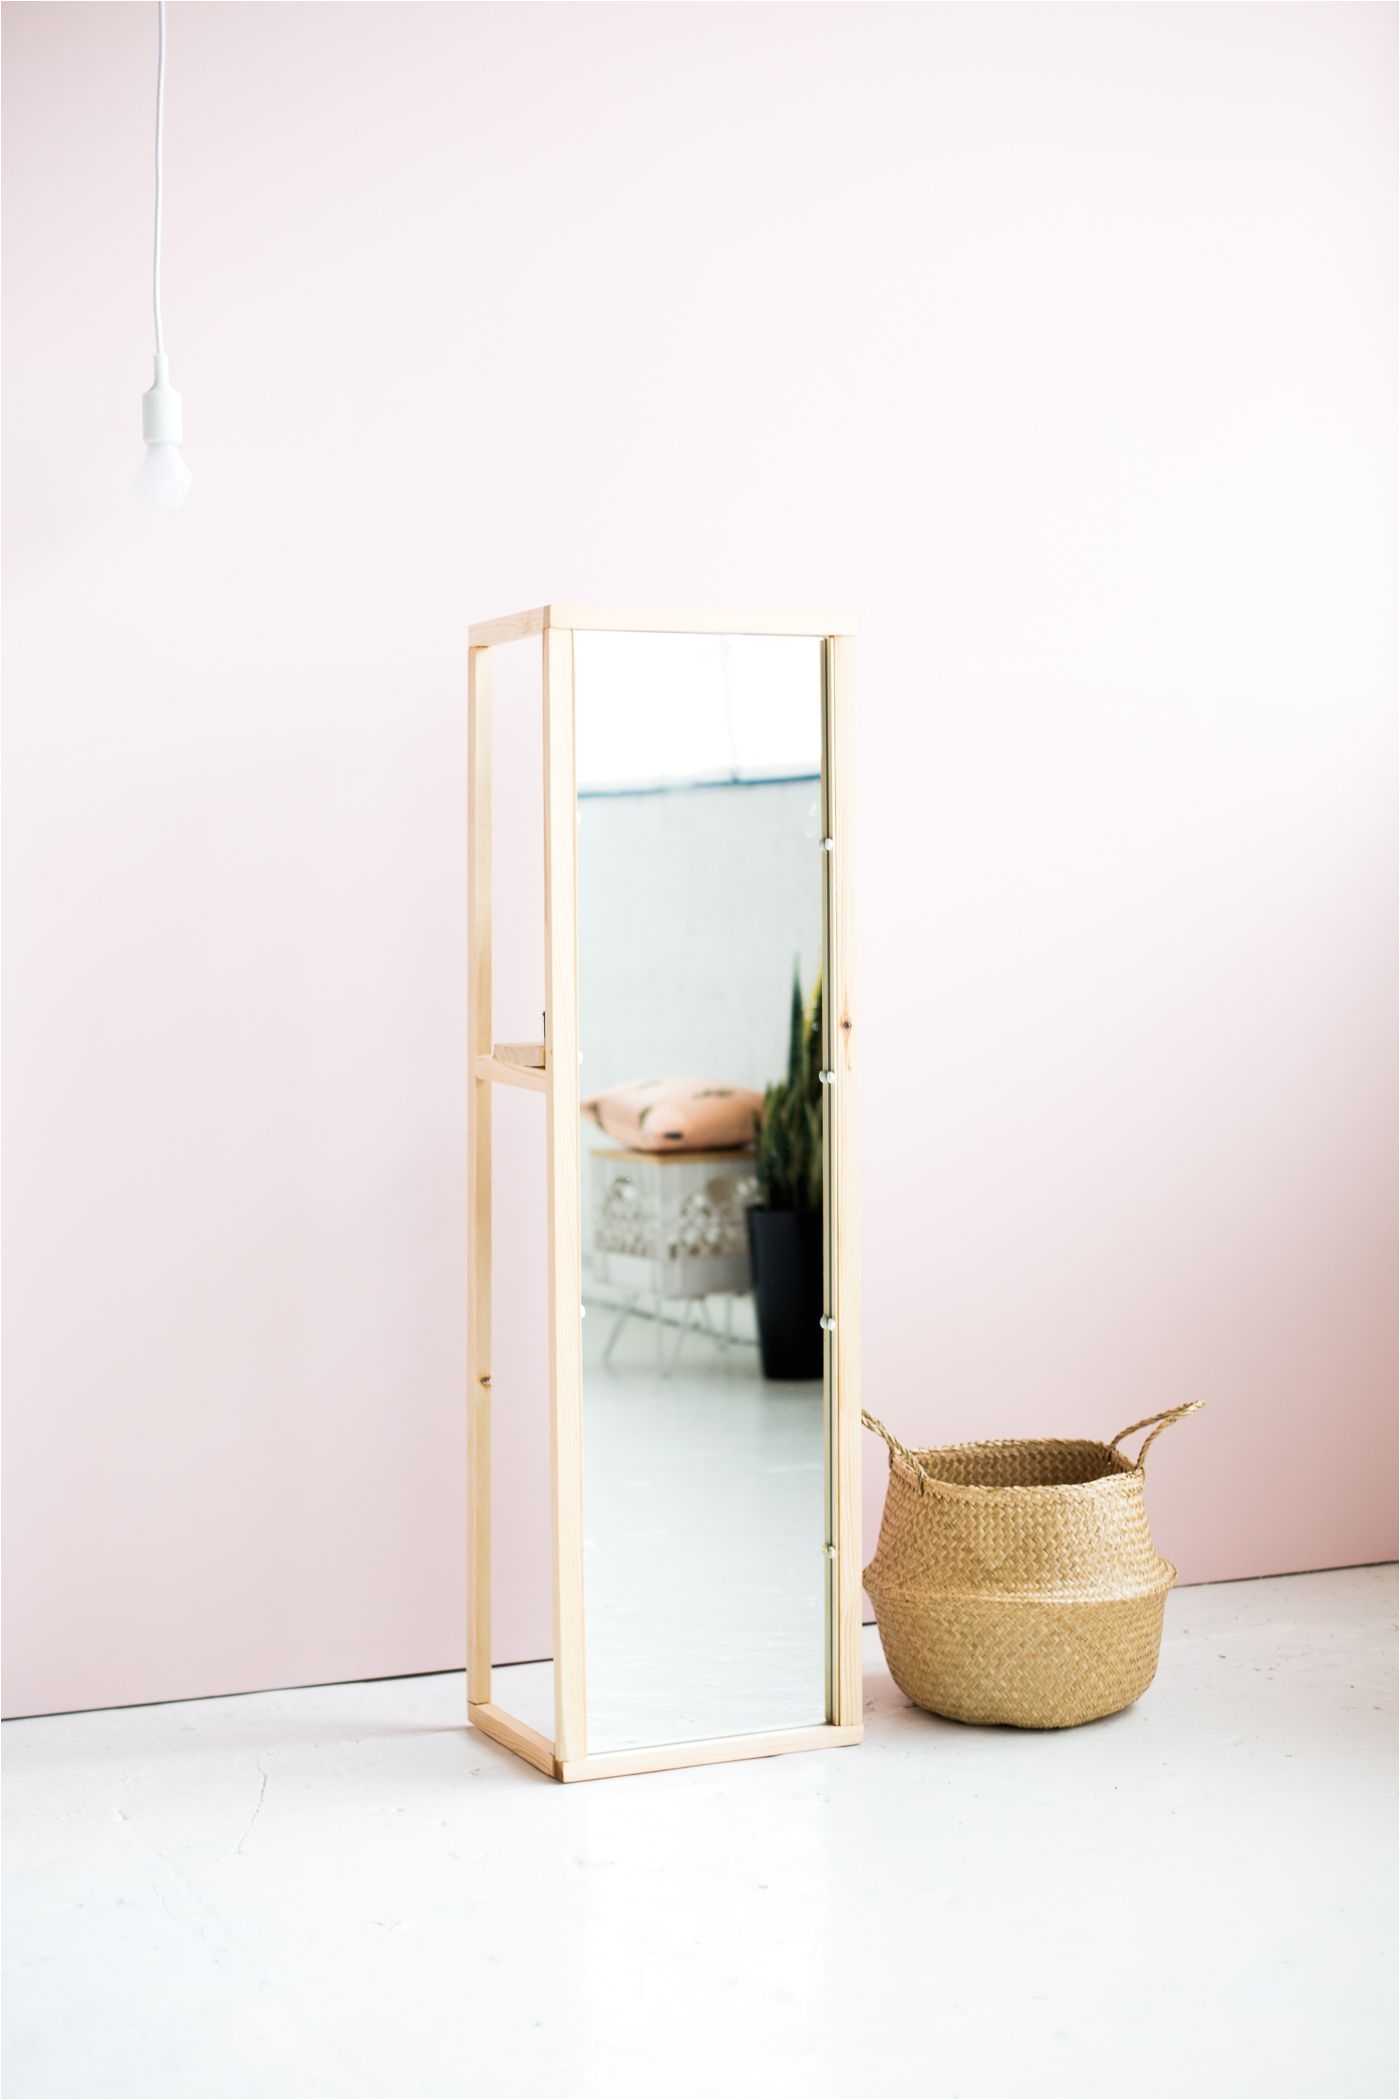 diy wooden floor standing mirror with the most useful shelf